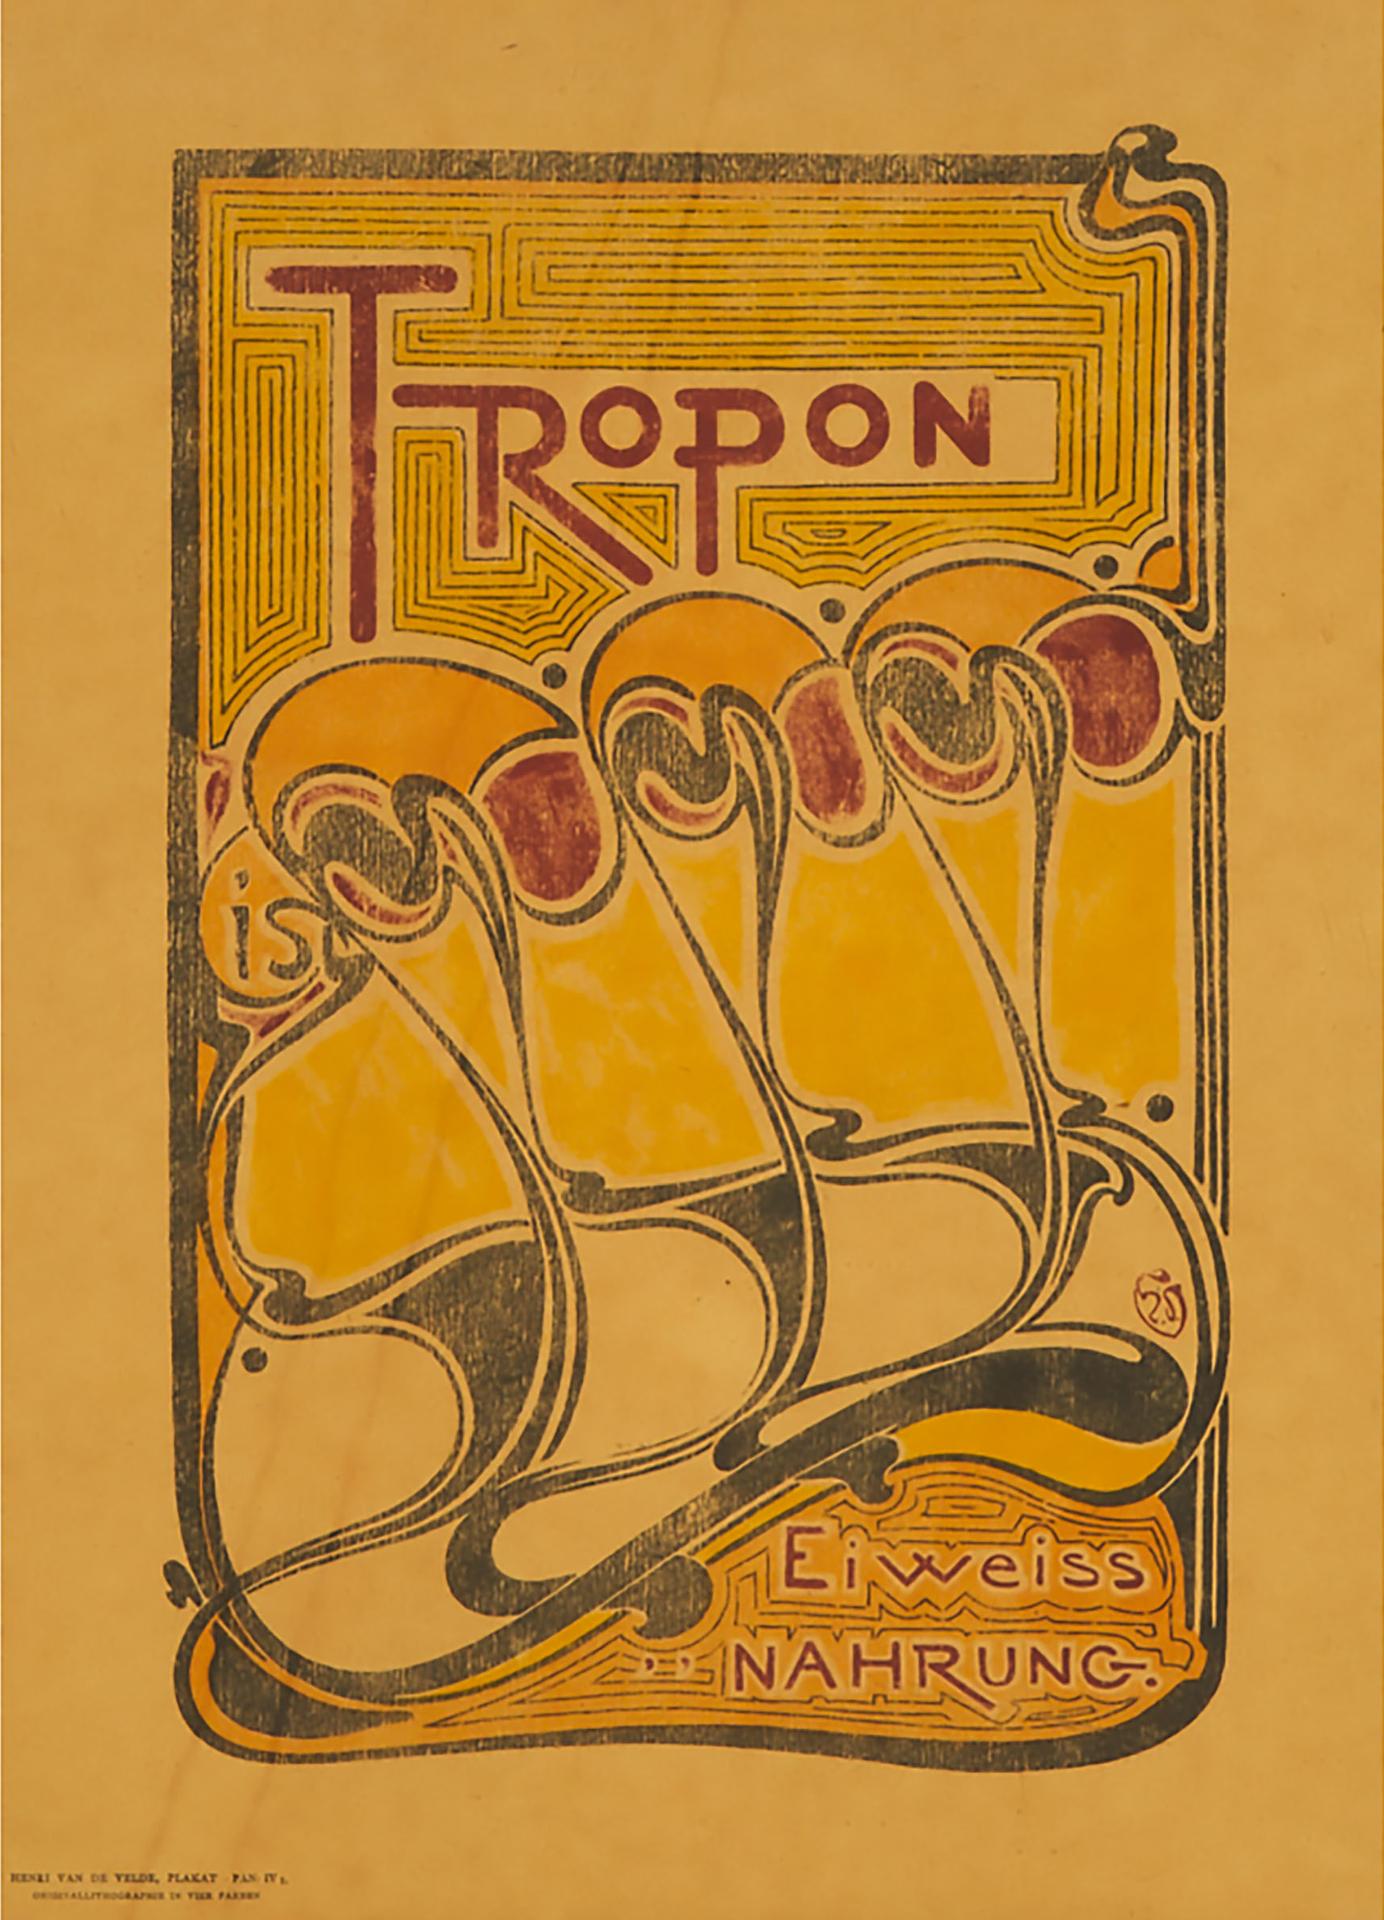 Henry van de Velde (1863-1957) - Tropon, Eiweiss Nahrung, 1898